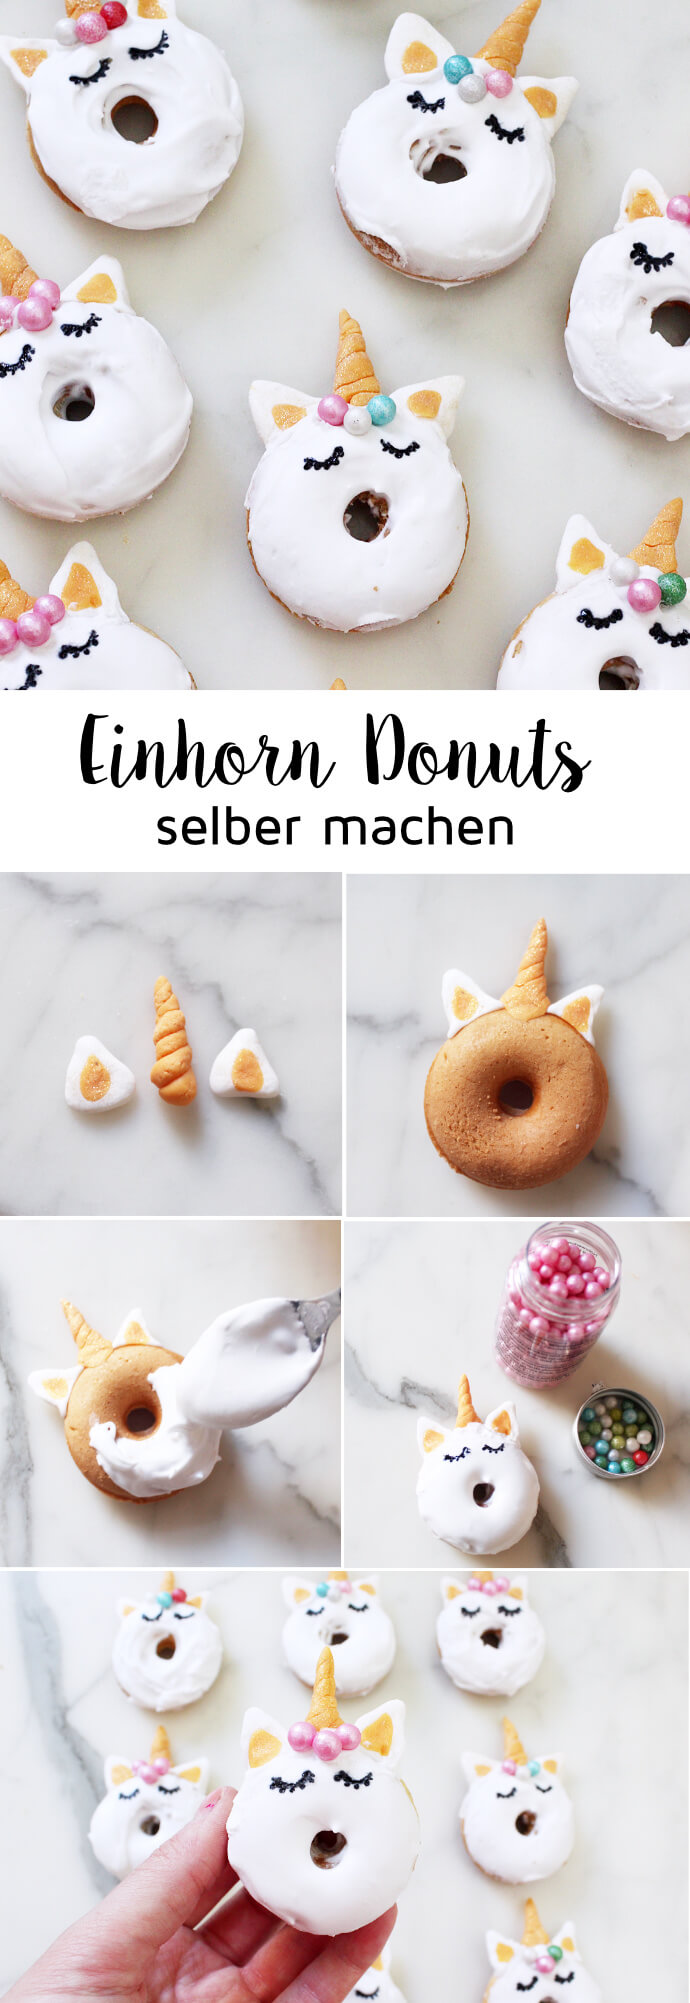 Einhorn-Donuts-backen-Rezept-Unicorns-DIY-Blog